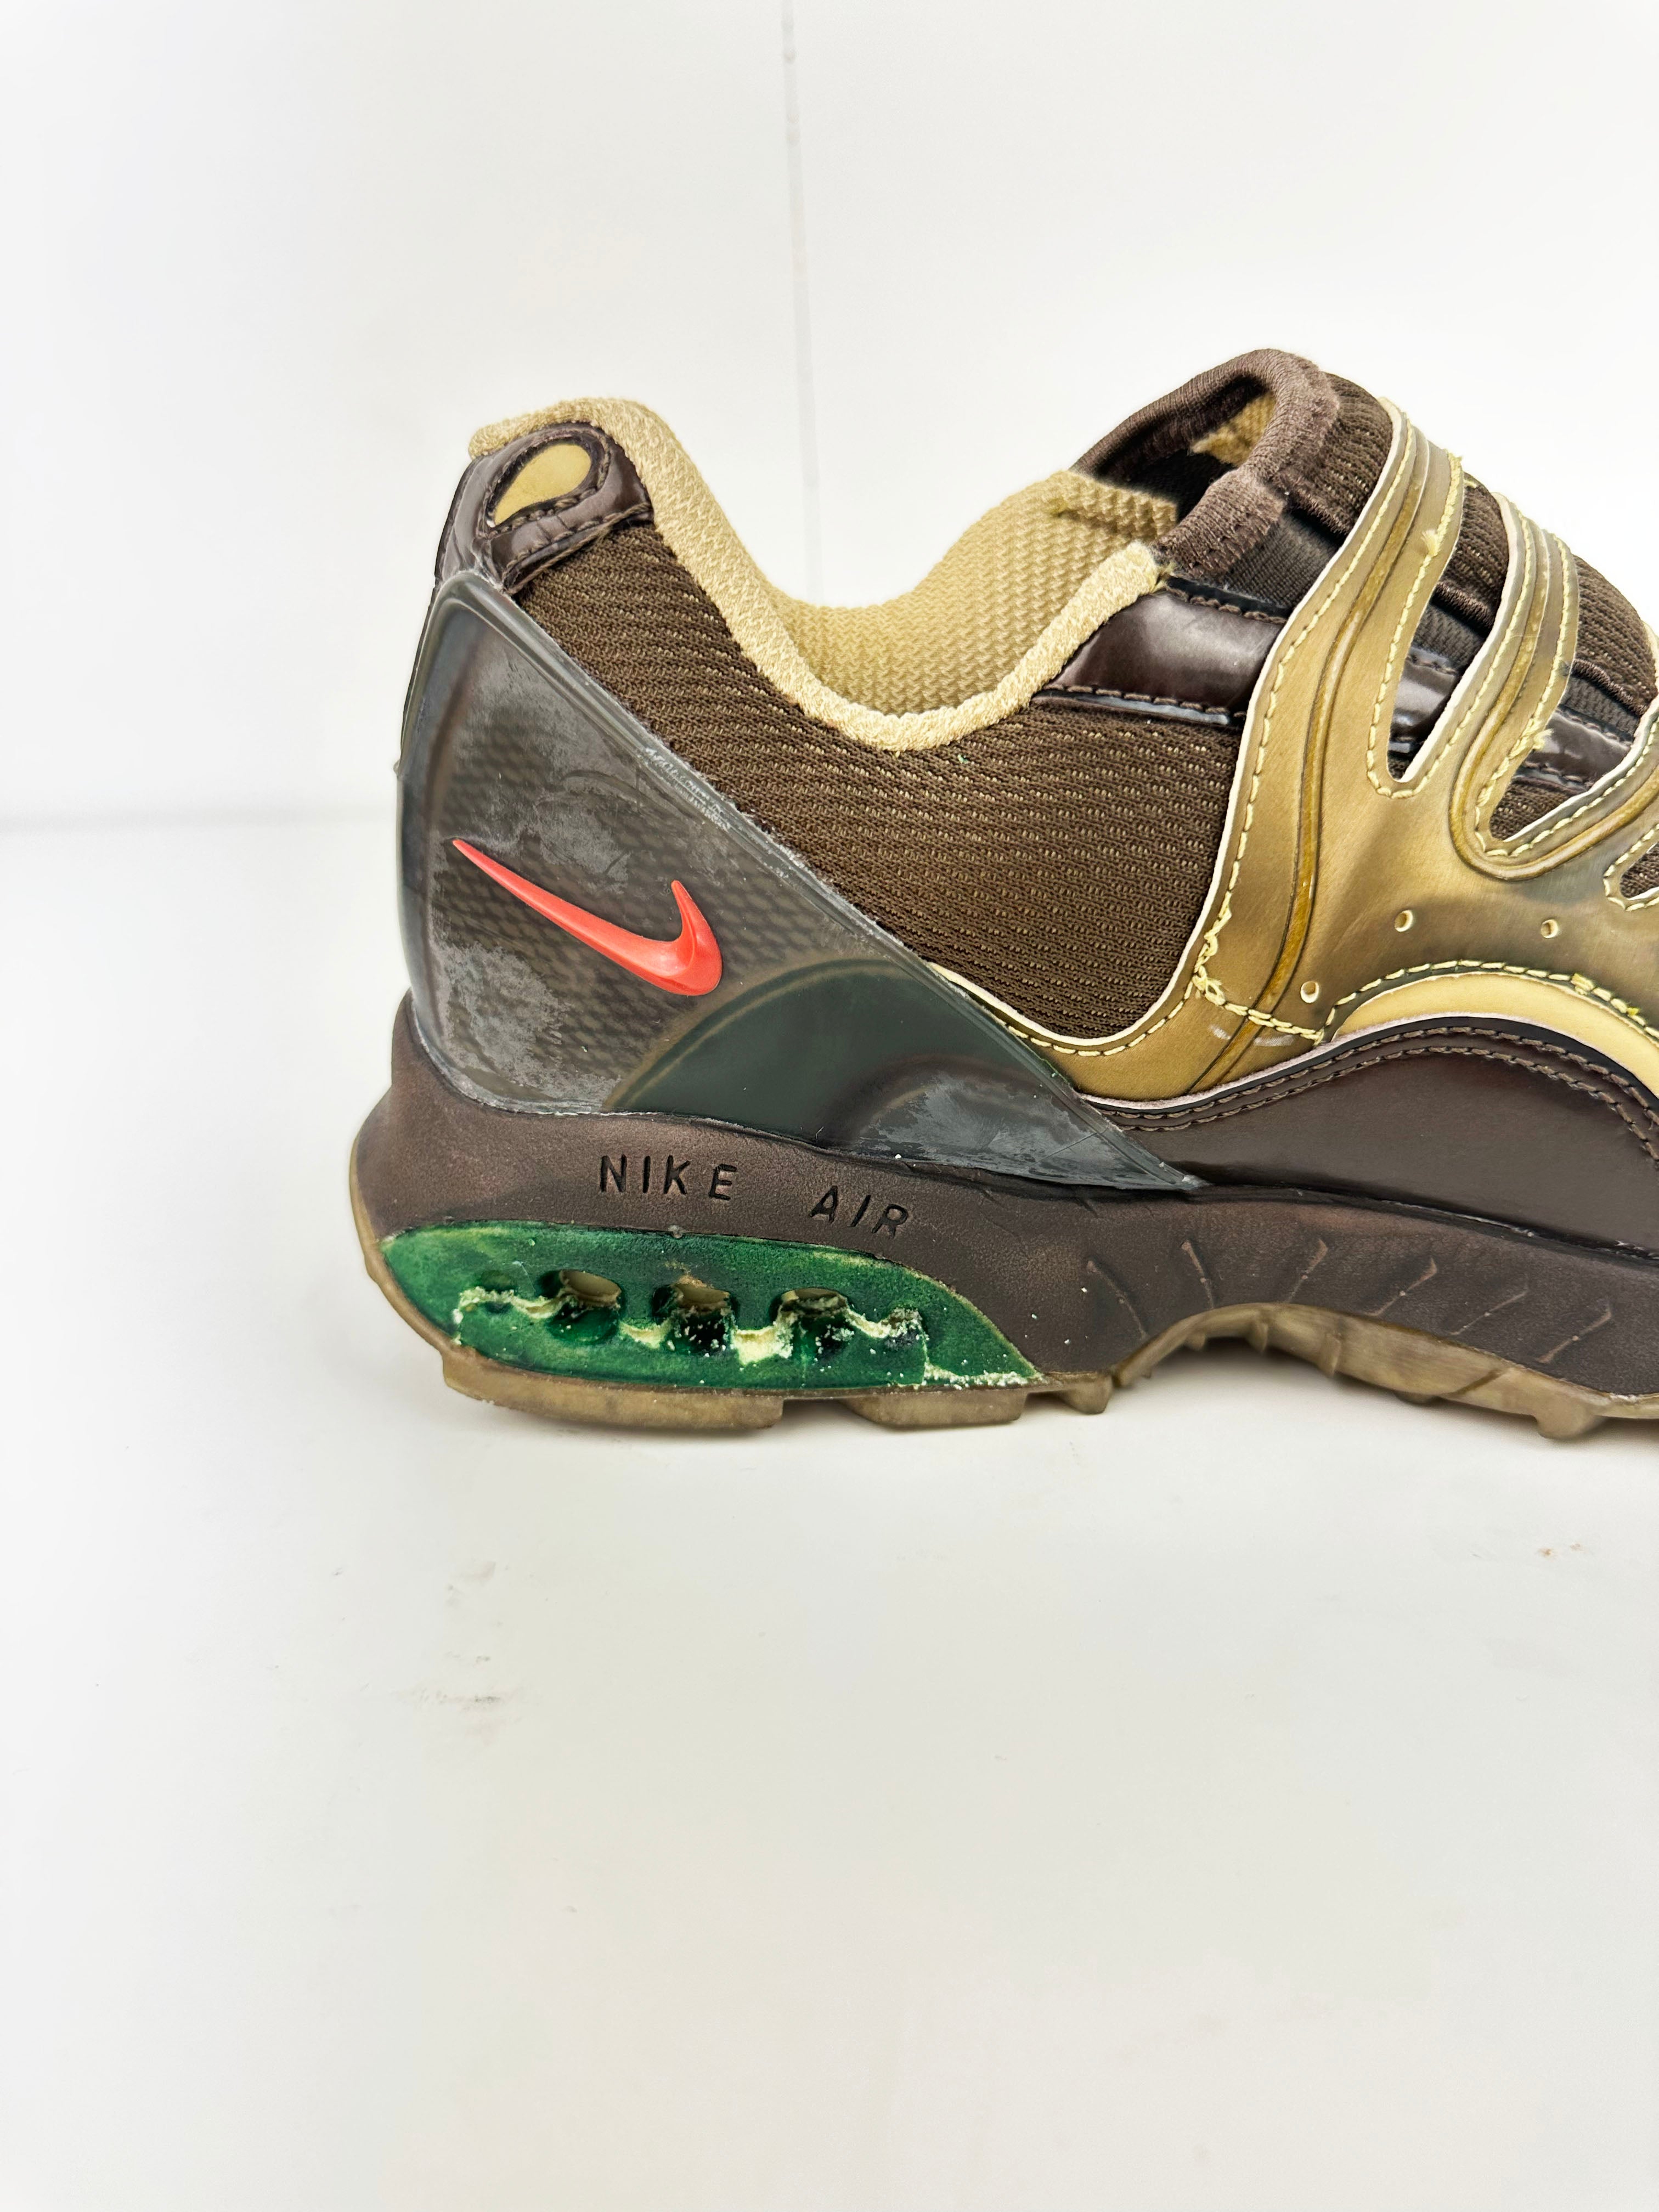 Nike Slip On Humaras circa 2000 Size 8